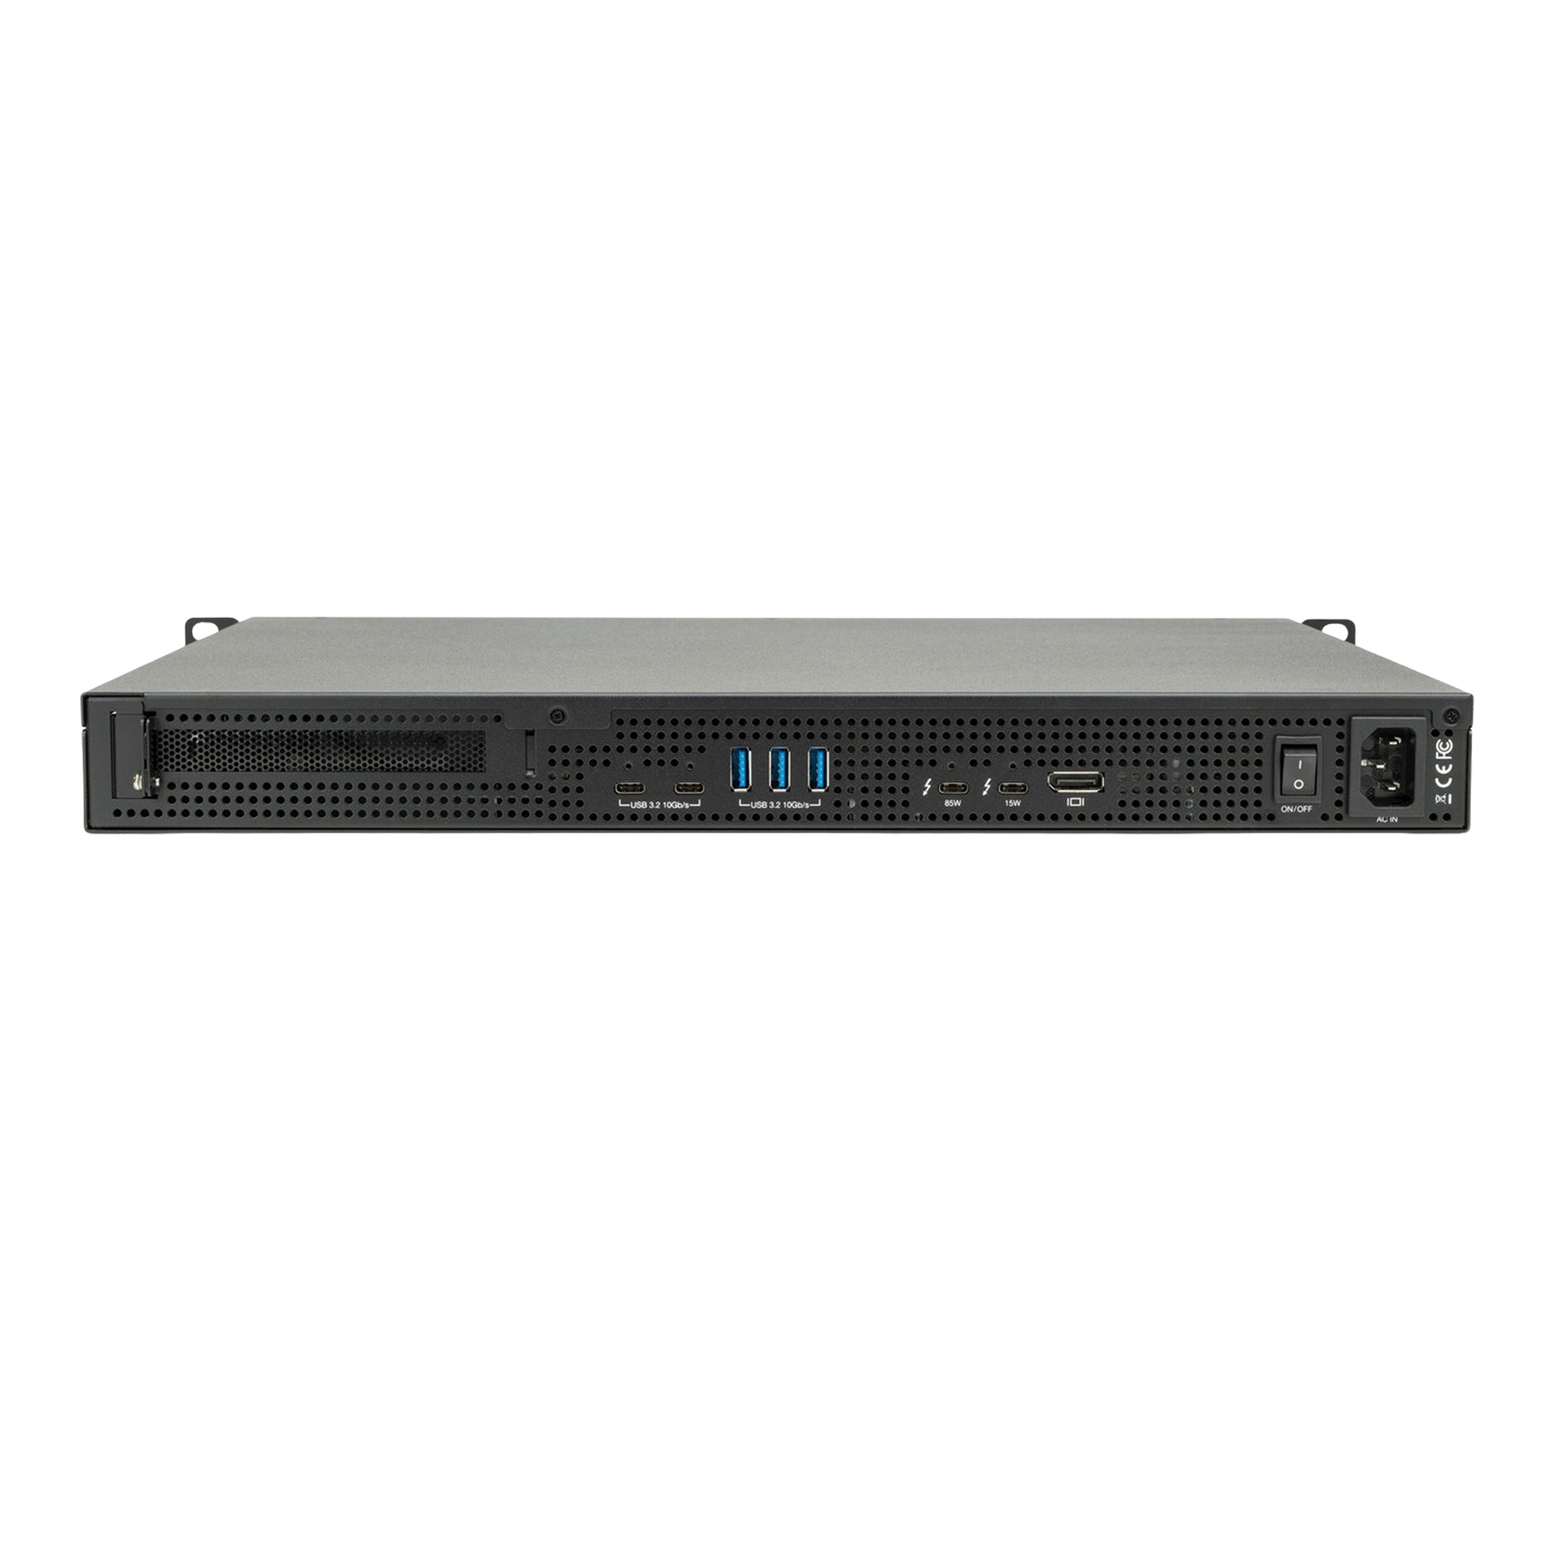 OWC 32TB (4 x 2TB NVMe + 3 x 8TB HDD) Flex 1U4 4-Bay Rackmount Thunderbolt Storage, Docking & PCIe Expansion Solution